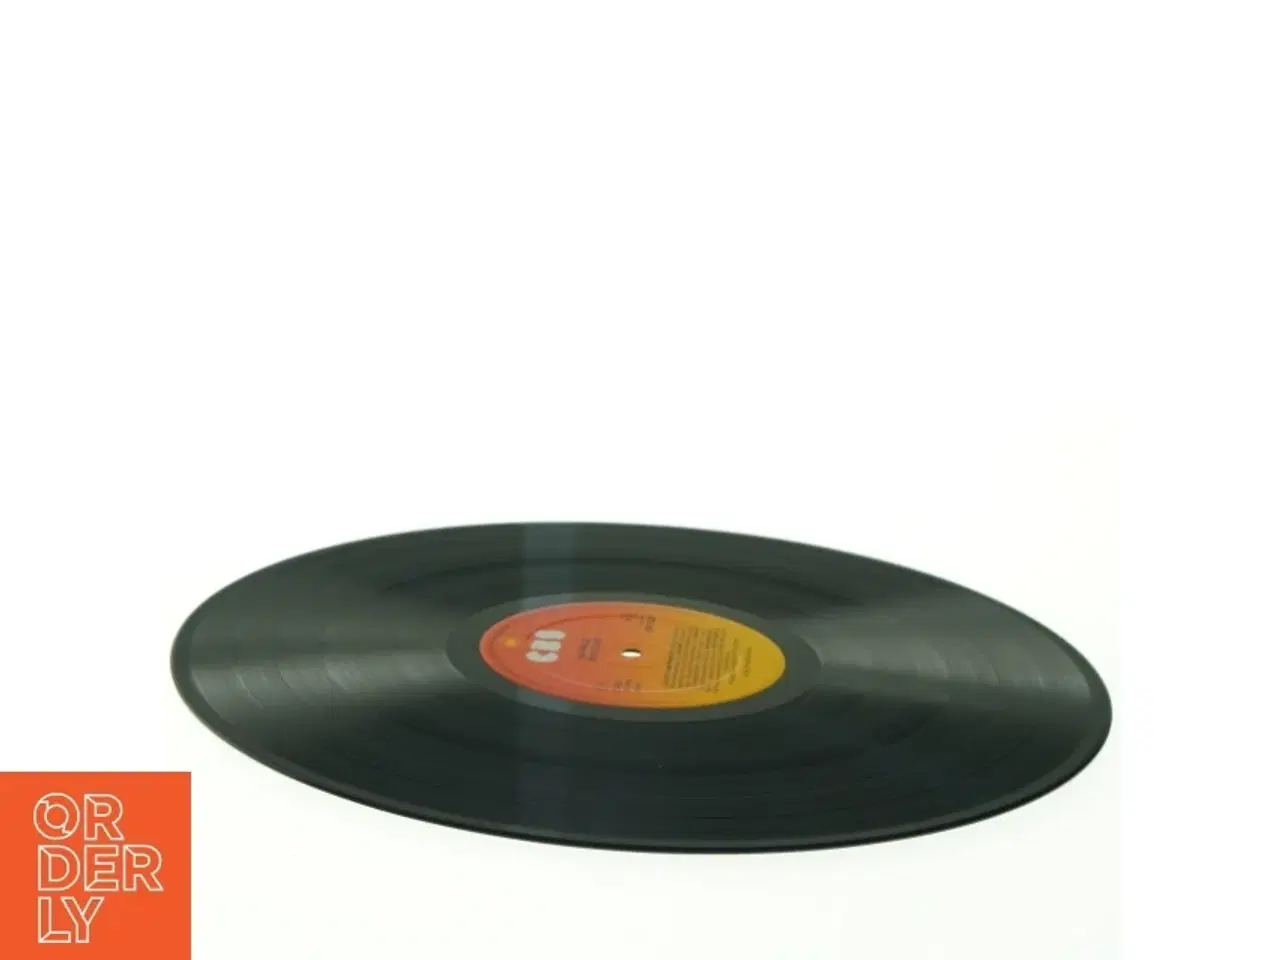 Billede 3 - Paul Young - No Parlez LP vinylplade fra CBS (str. 31 x 31 cm)